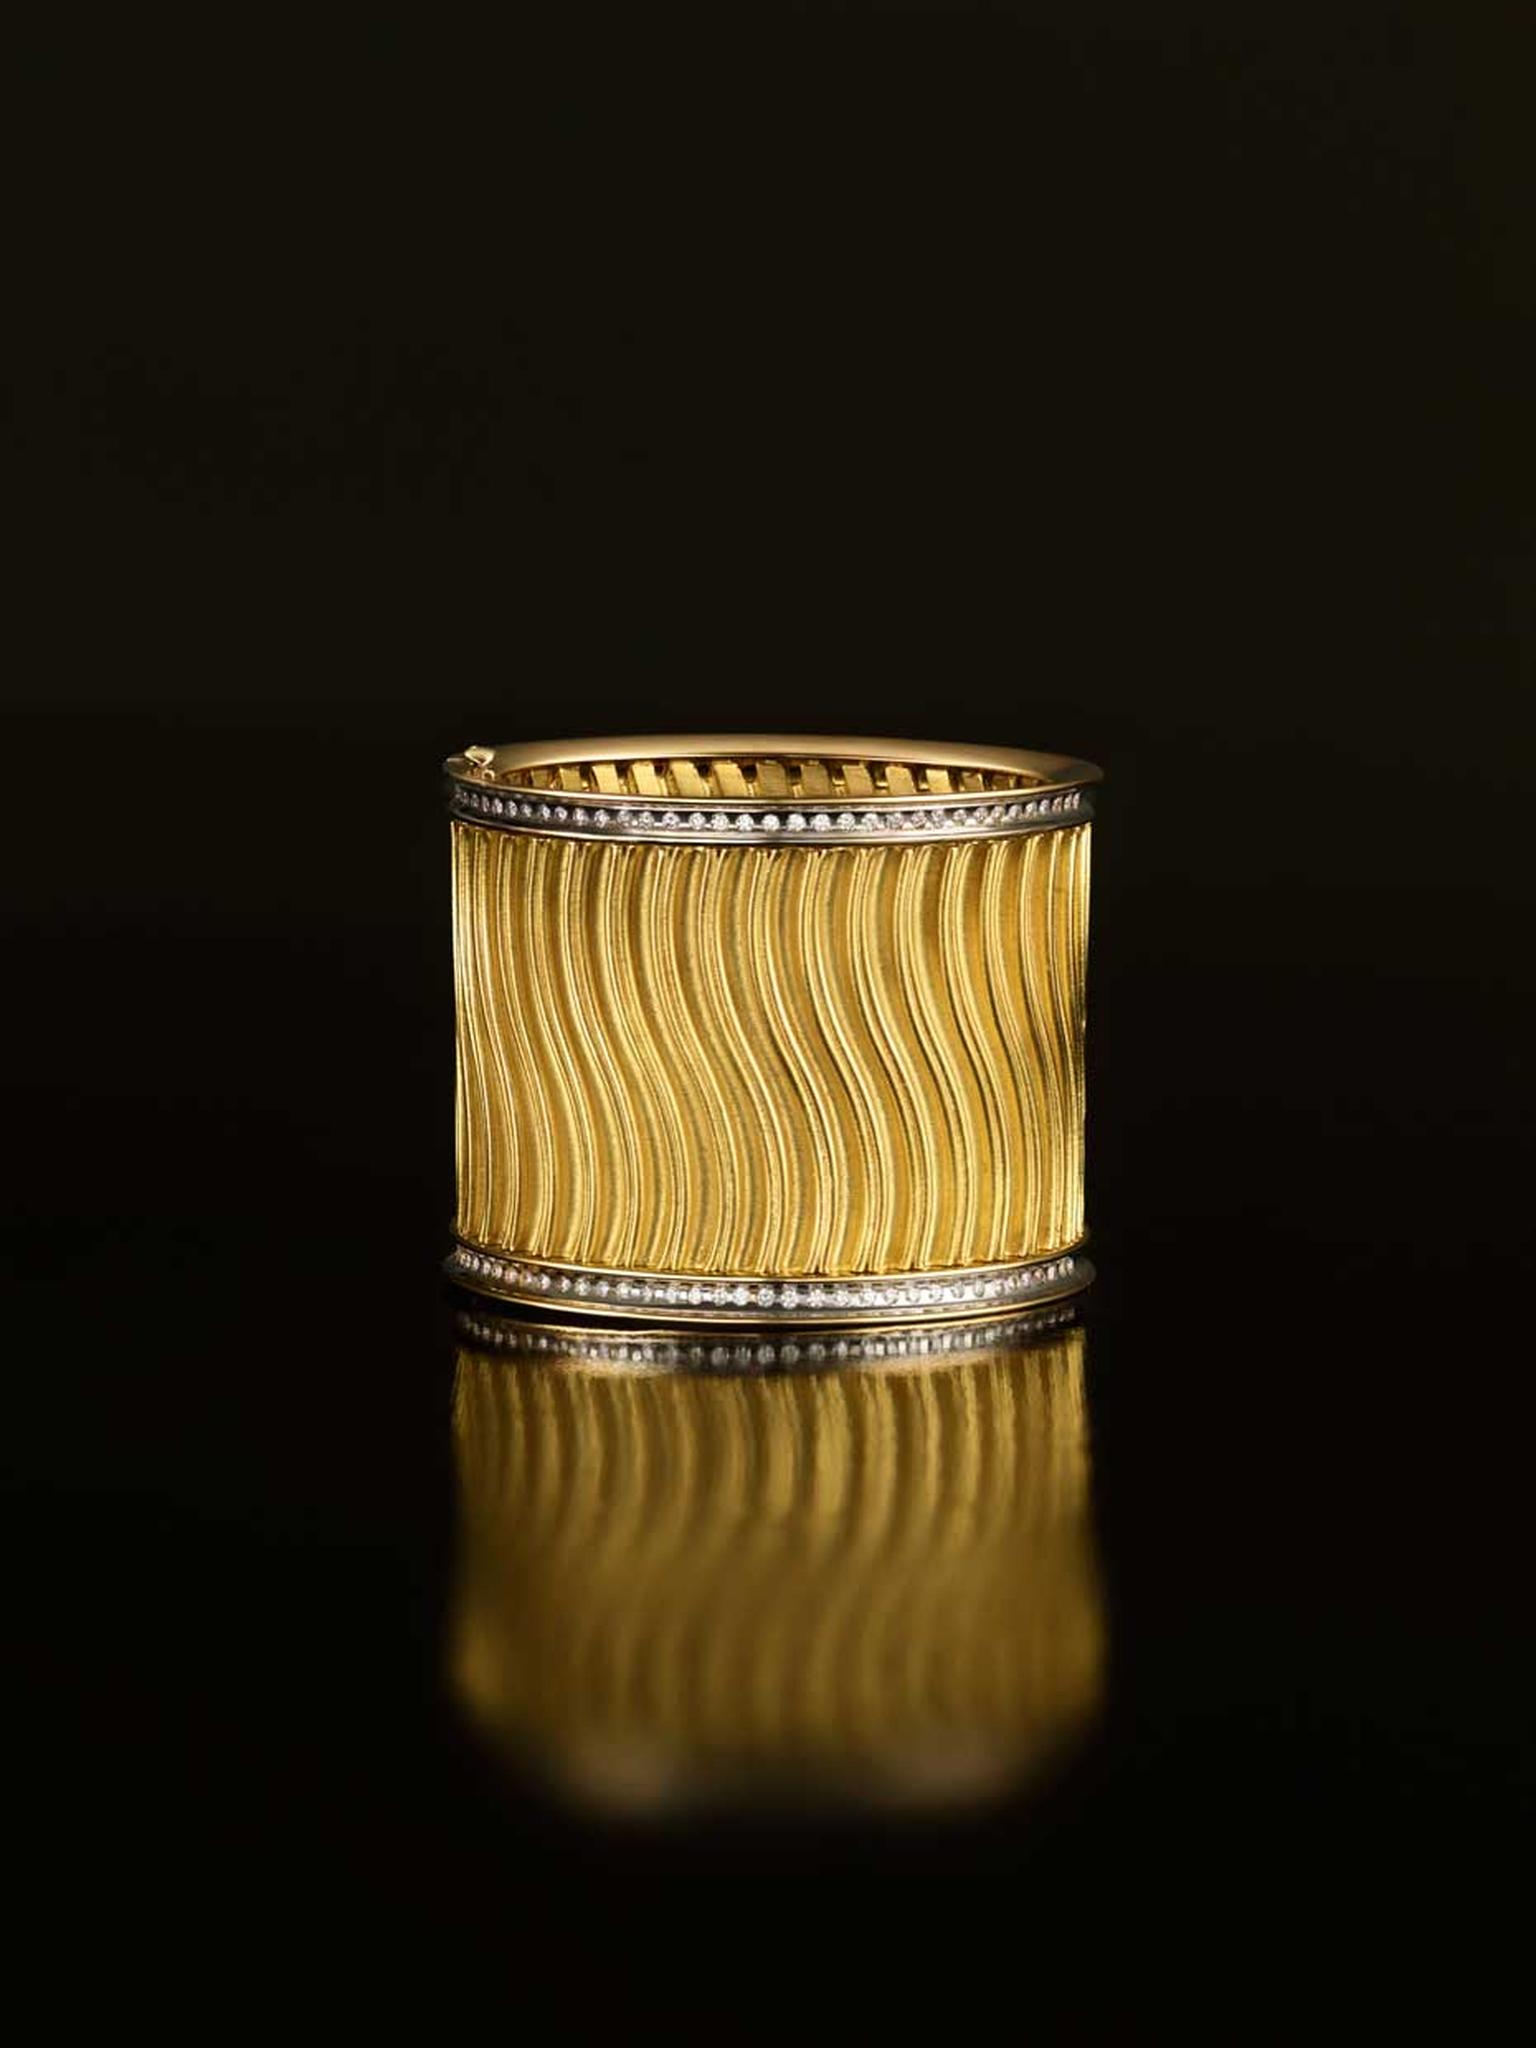 Liv Ballard Collection Cisterna Cuff in pleated yellow gold with pavé diamonds.